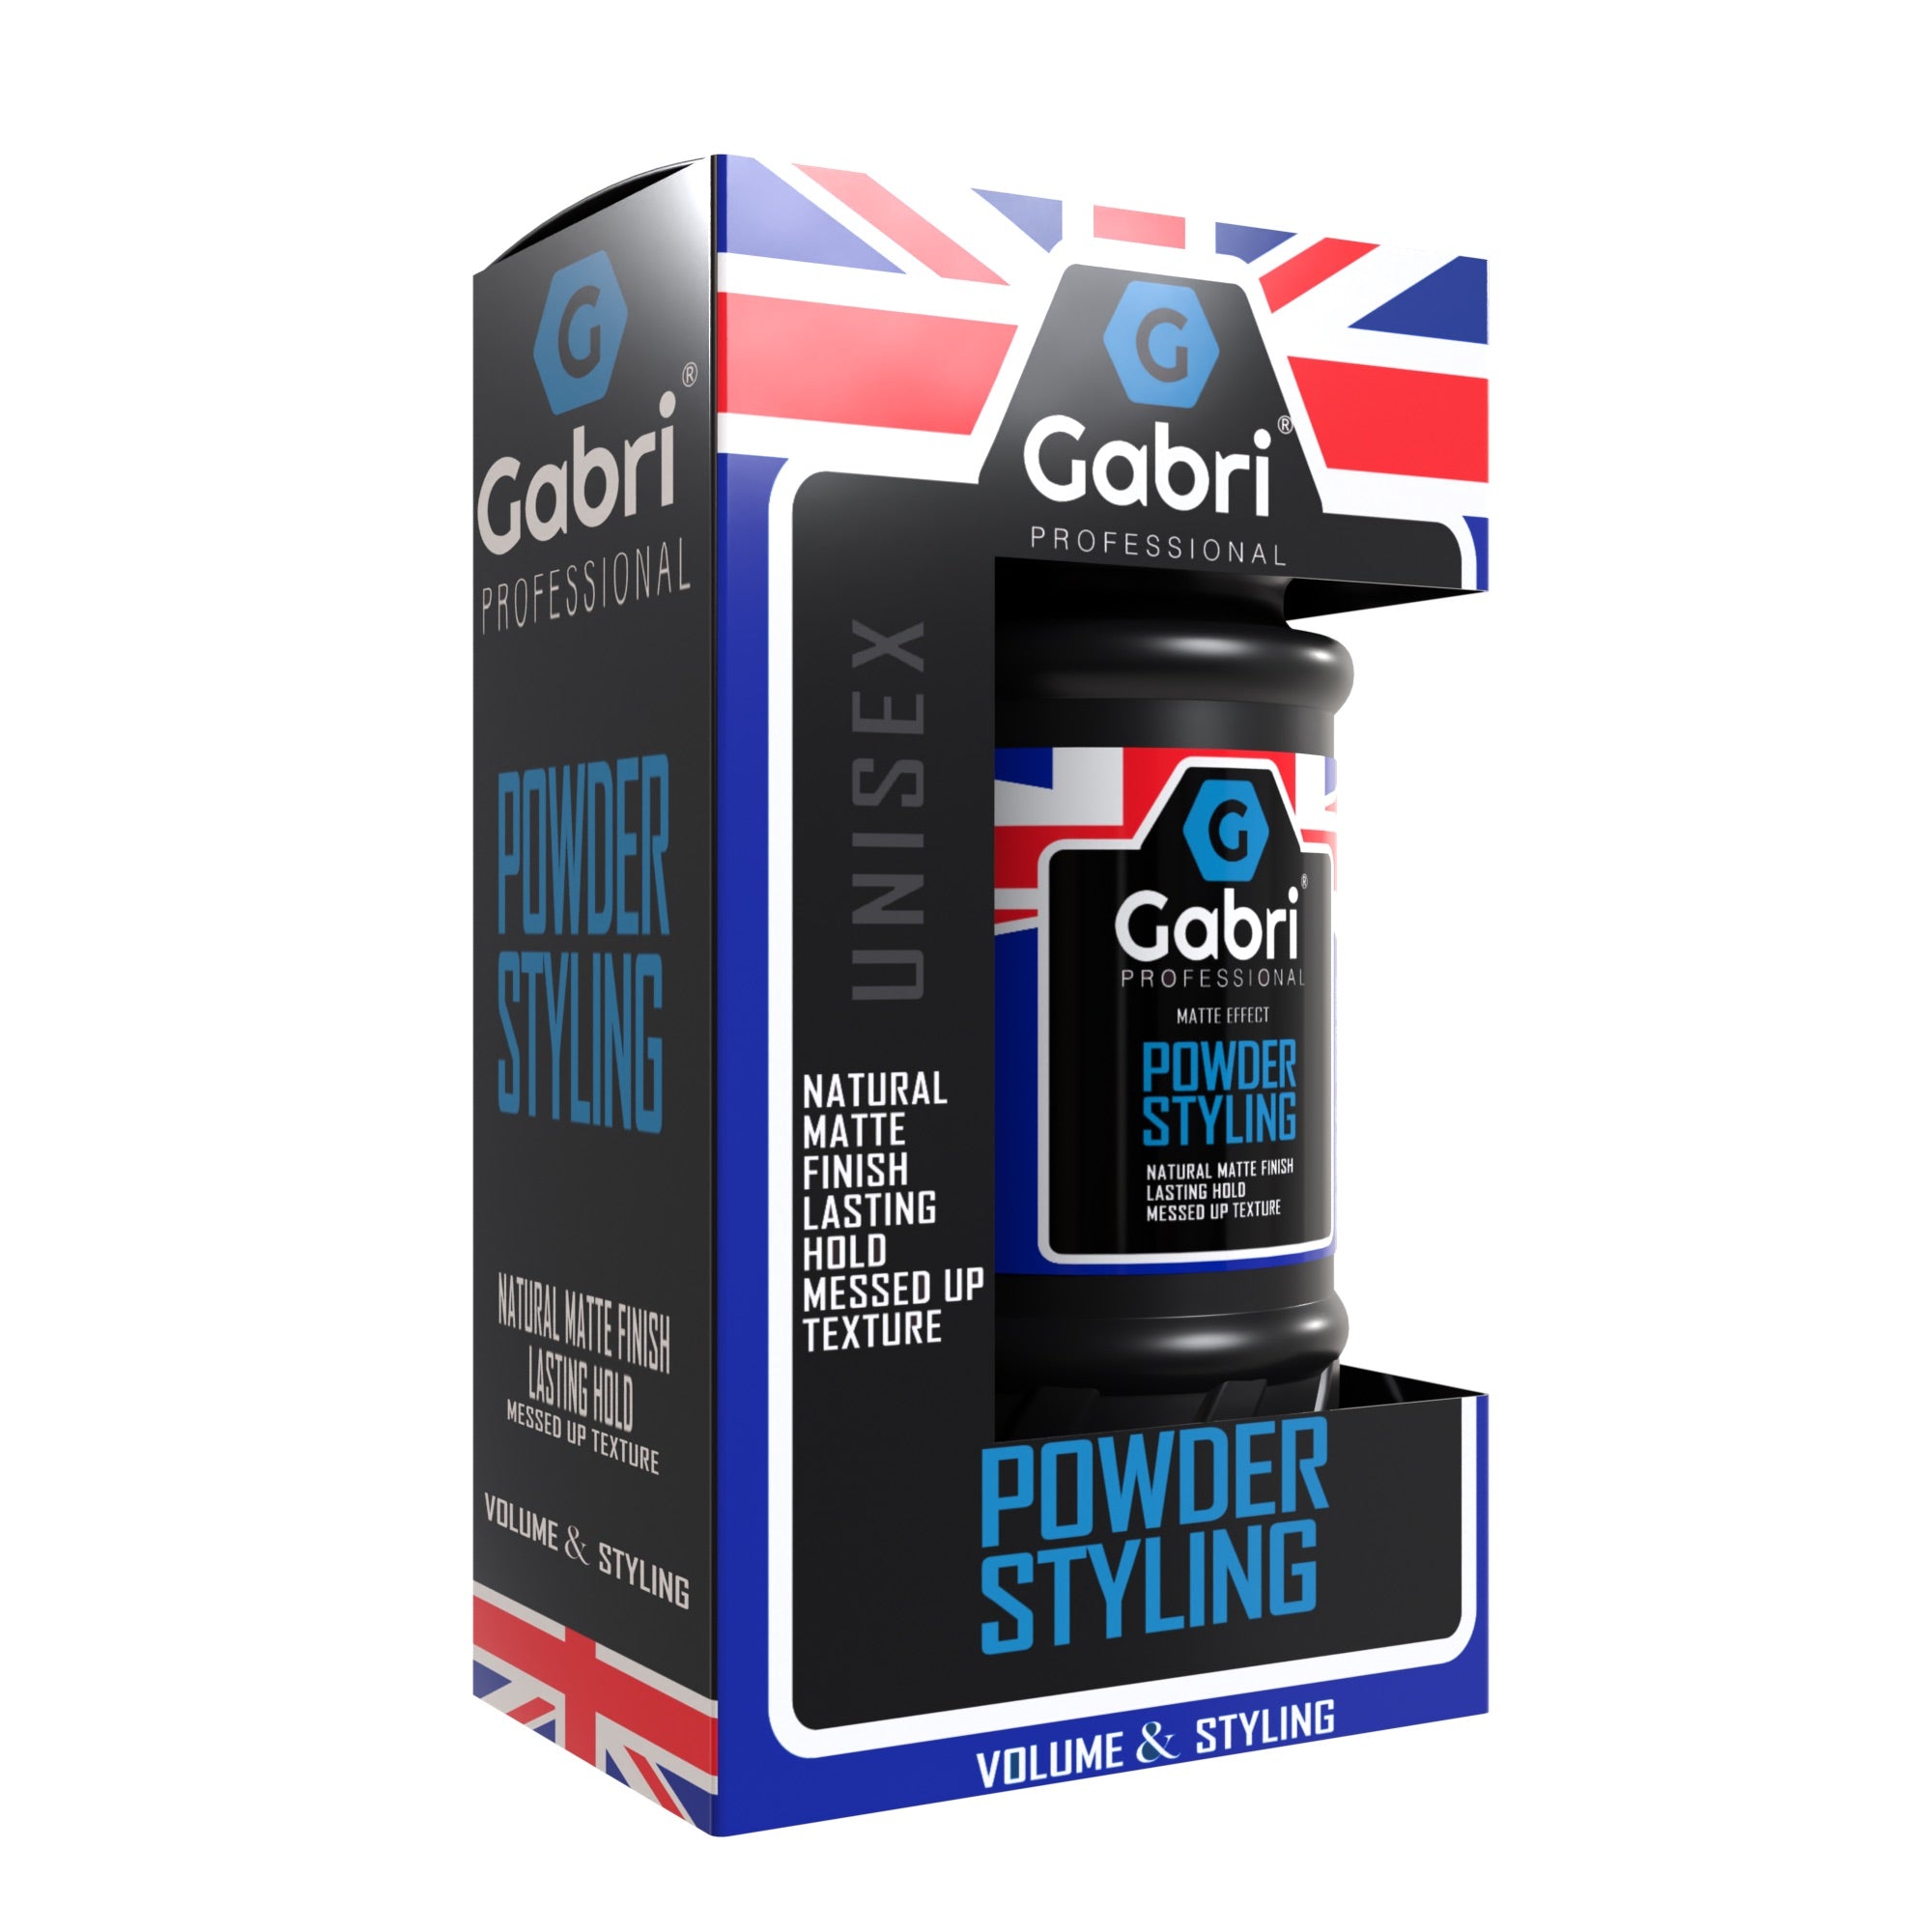 Gabri Professional - Hair Powder Styling Wax Volume & Styling 21g